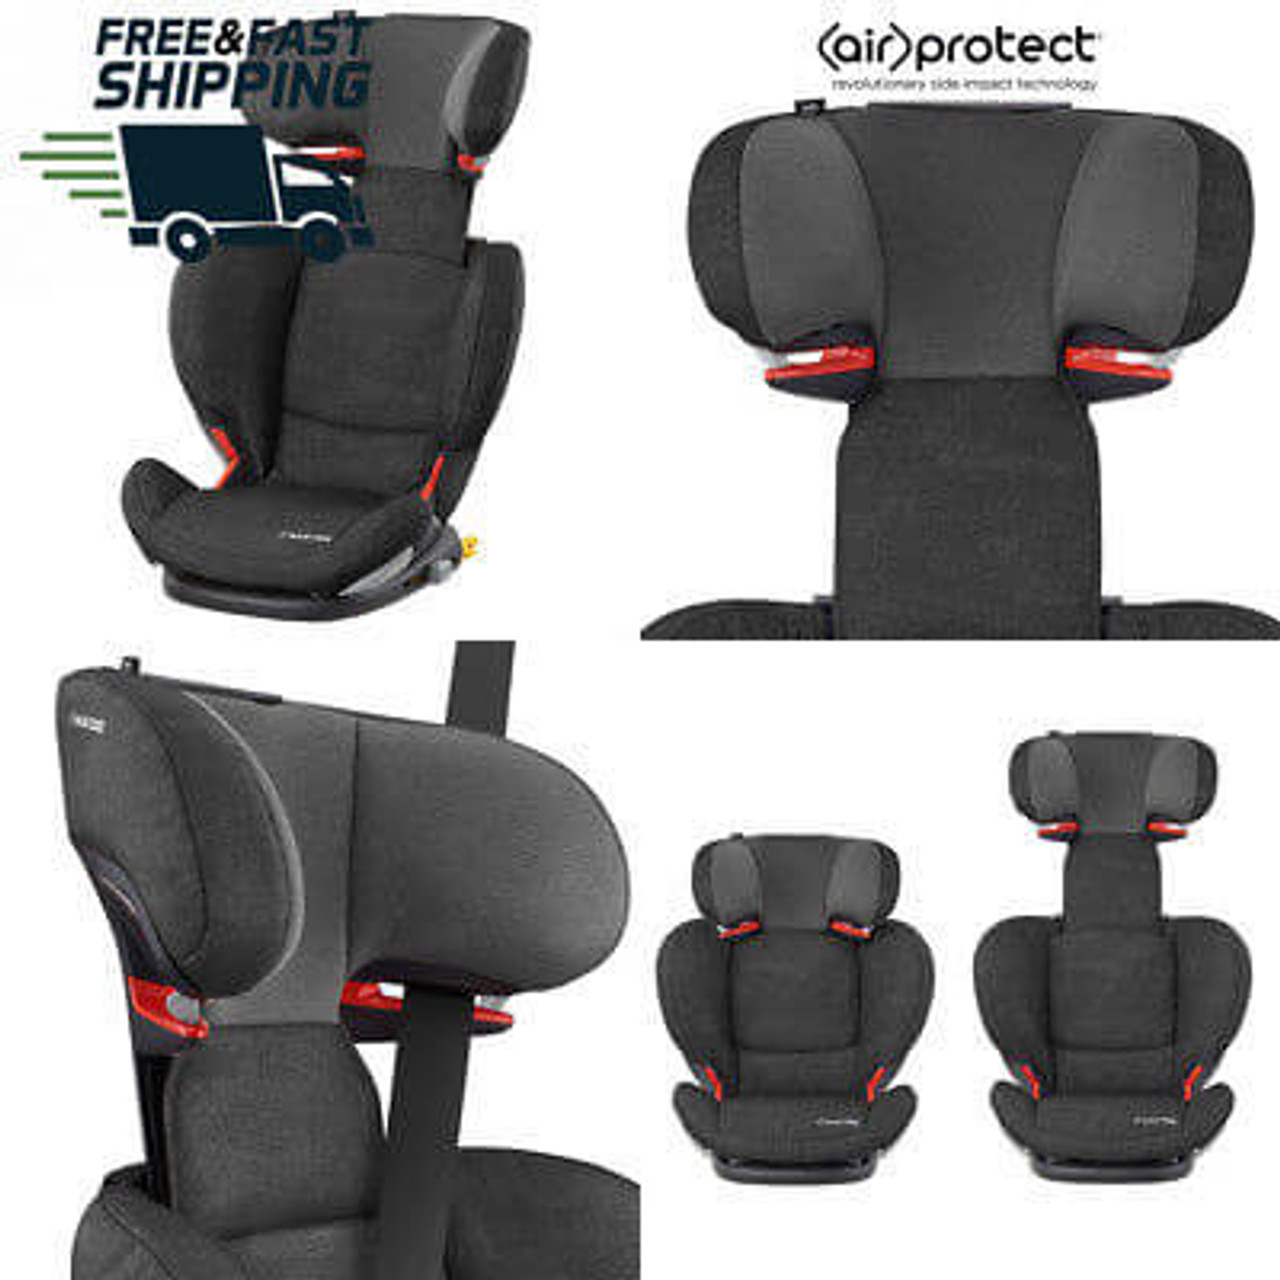 Maxi-Cosi Rodifix Air Protect Group 2/3 Car Seat Rodifix